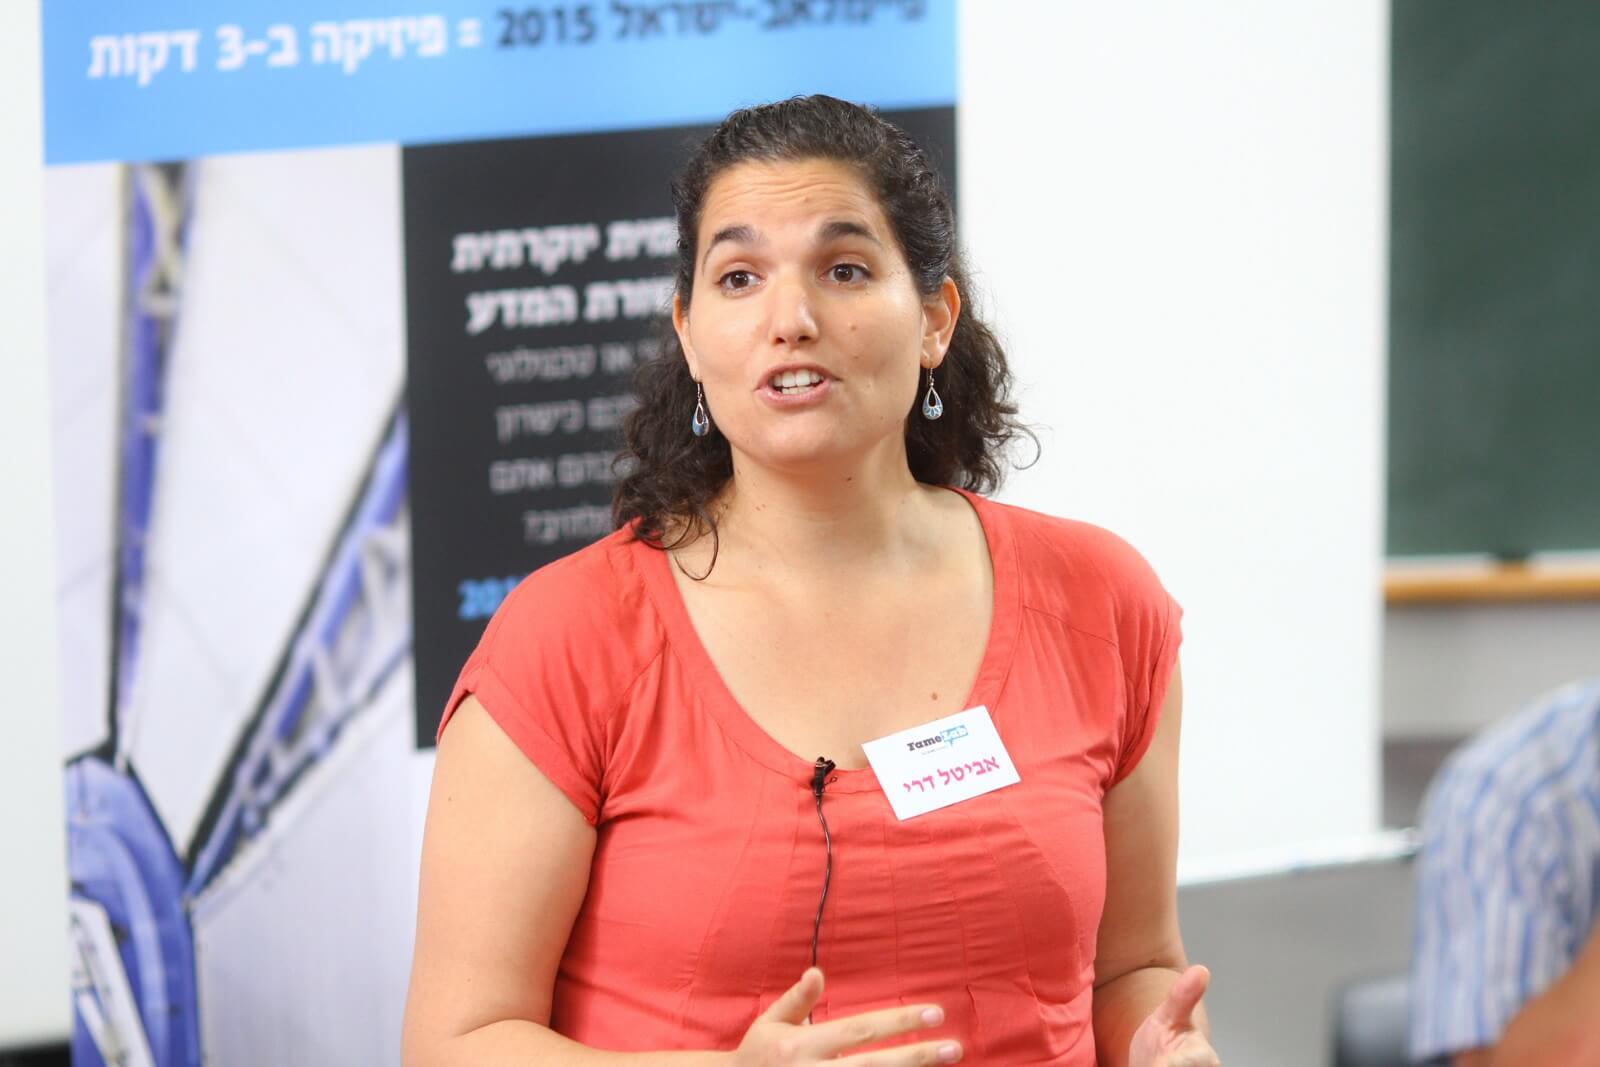 Avital Dari, winner of the FaymLab 2015 competition held at the Hamada Center in Tel Aviv on 7/5/15. Photo: Sion Black